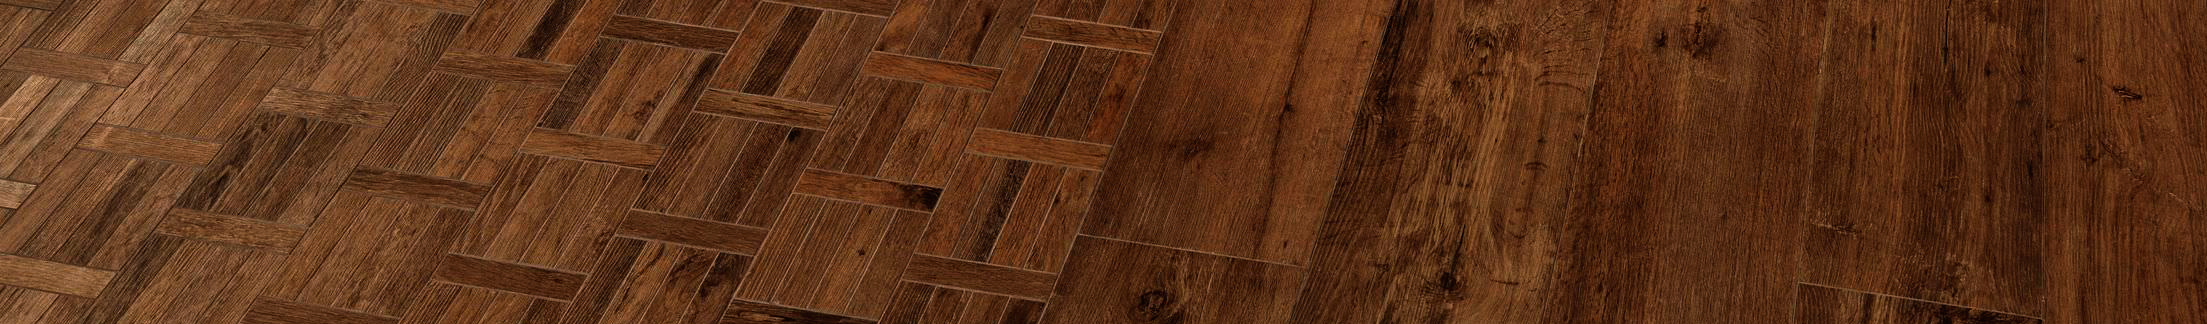 DLV Flooring - Hardwood Floor Installation and Refinishing Experts, Kansas City